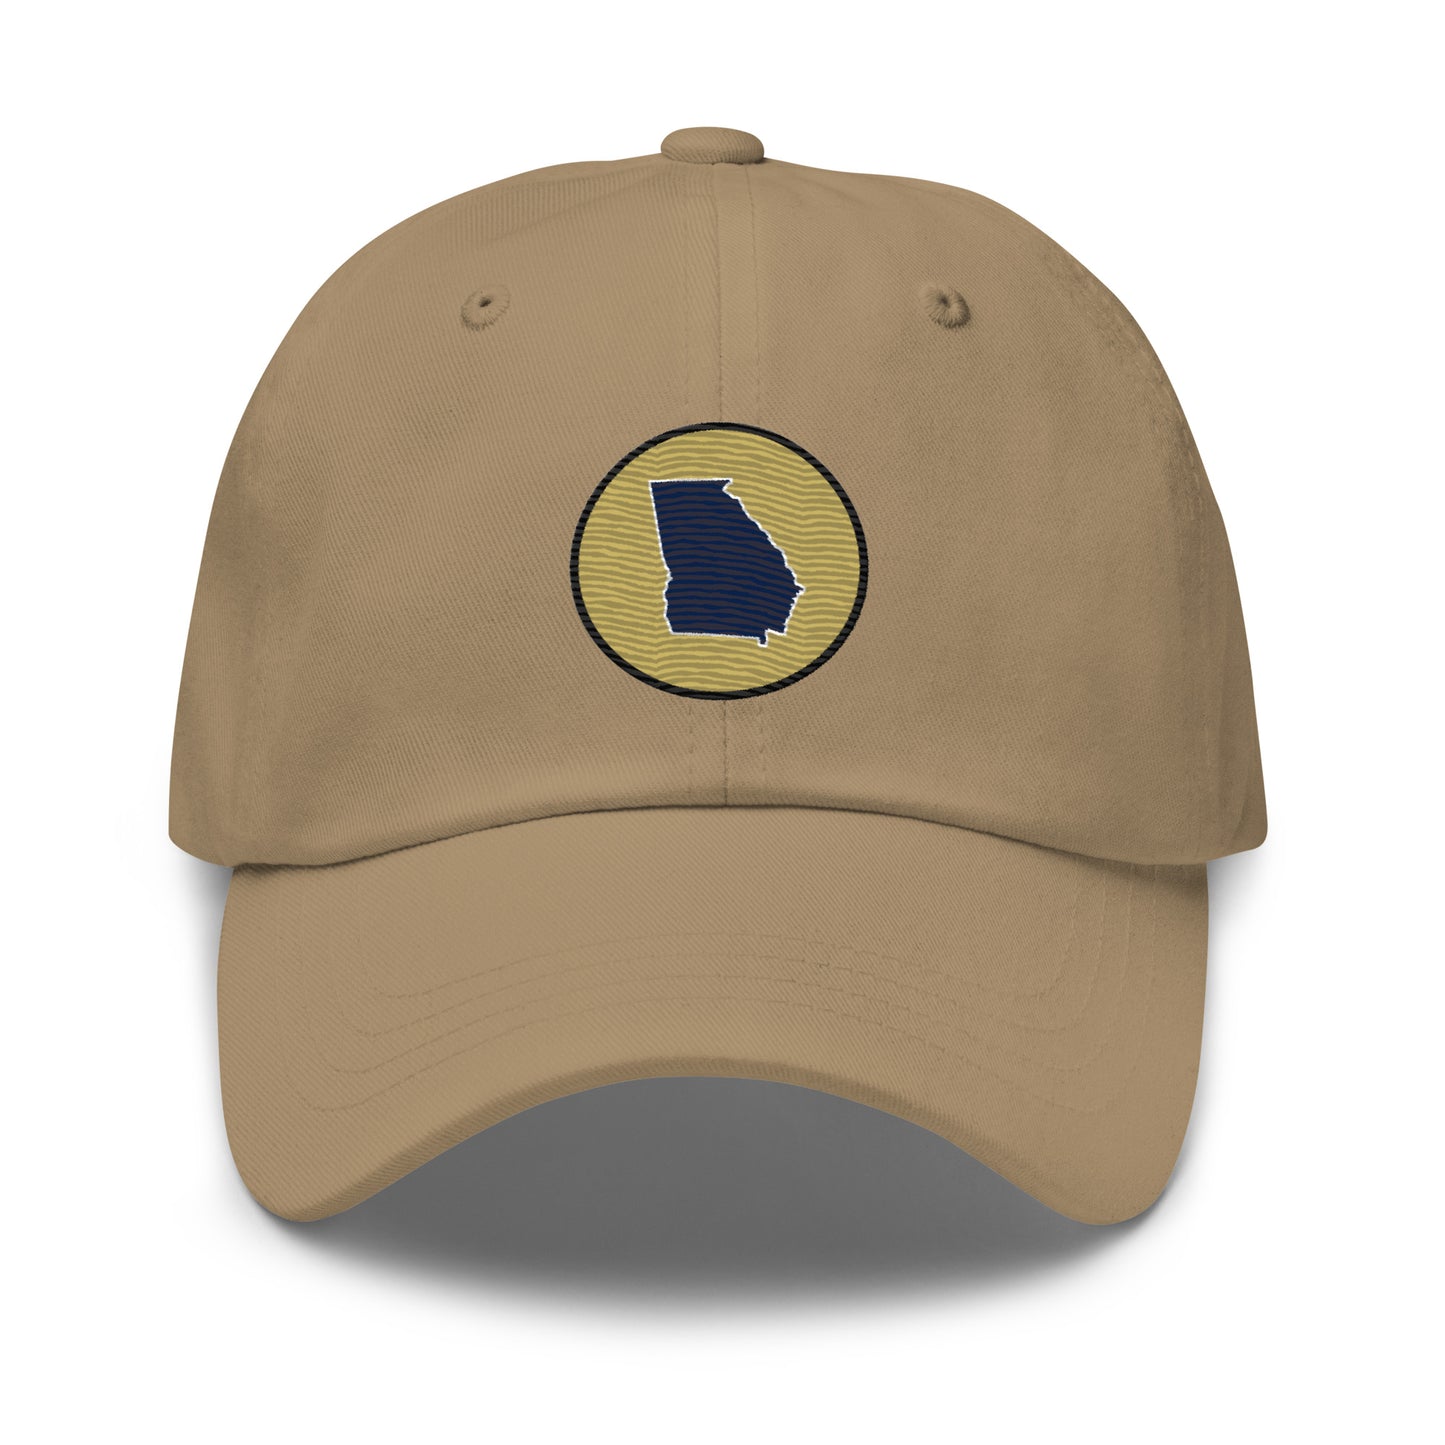 Atlanta, Georgia Hat